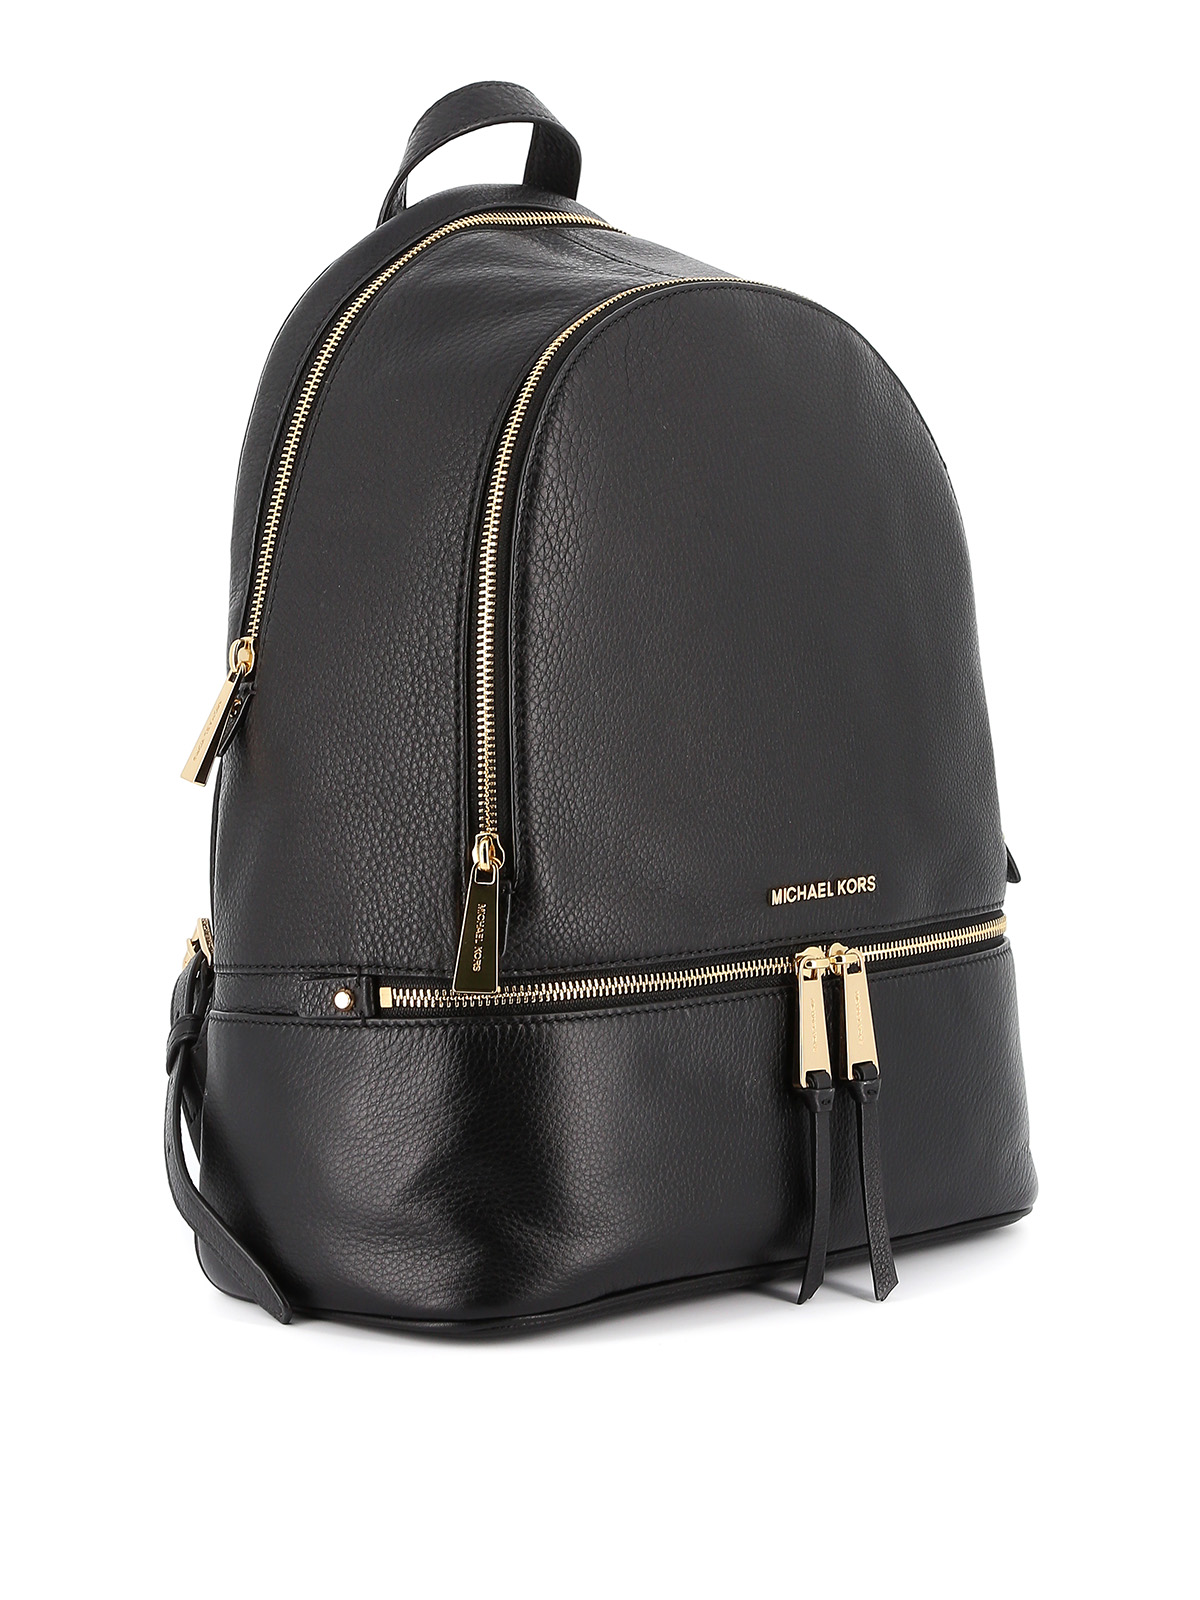 Backpacks Michael Kors - Rhea black large backpack - 30S5GEZB3L001